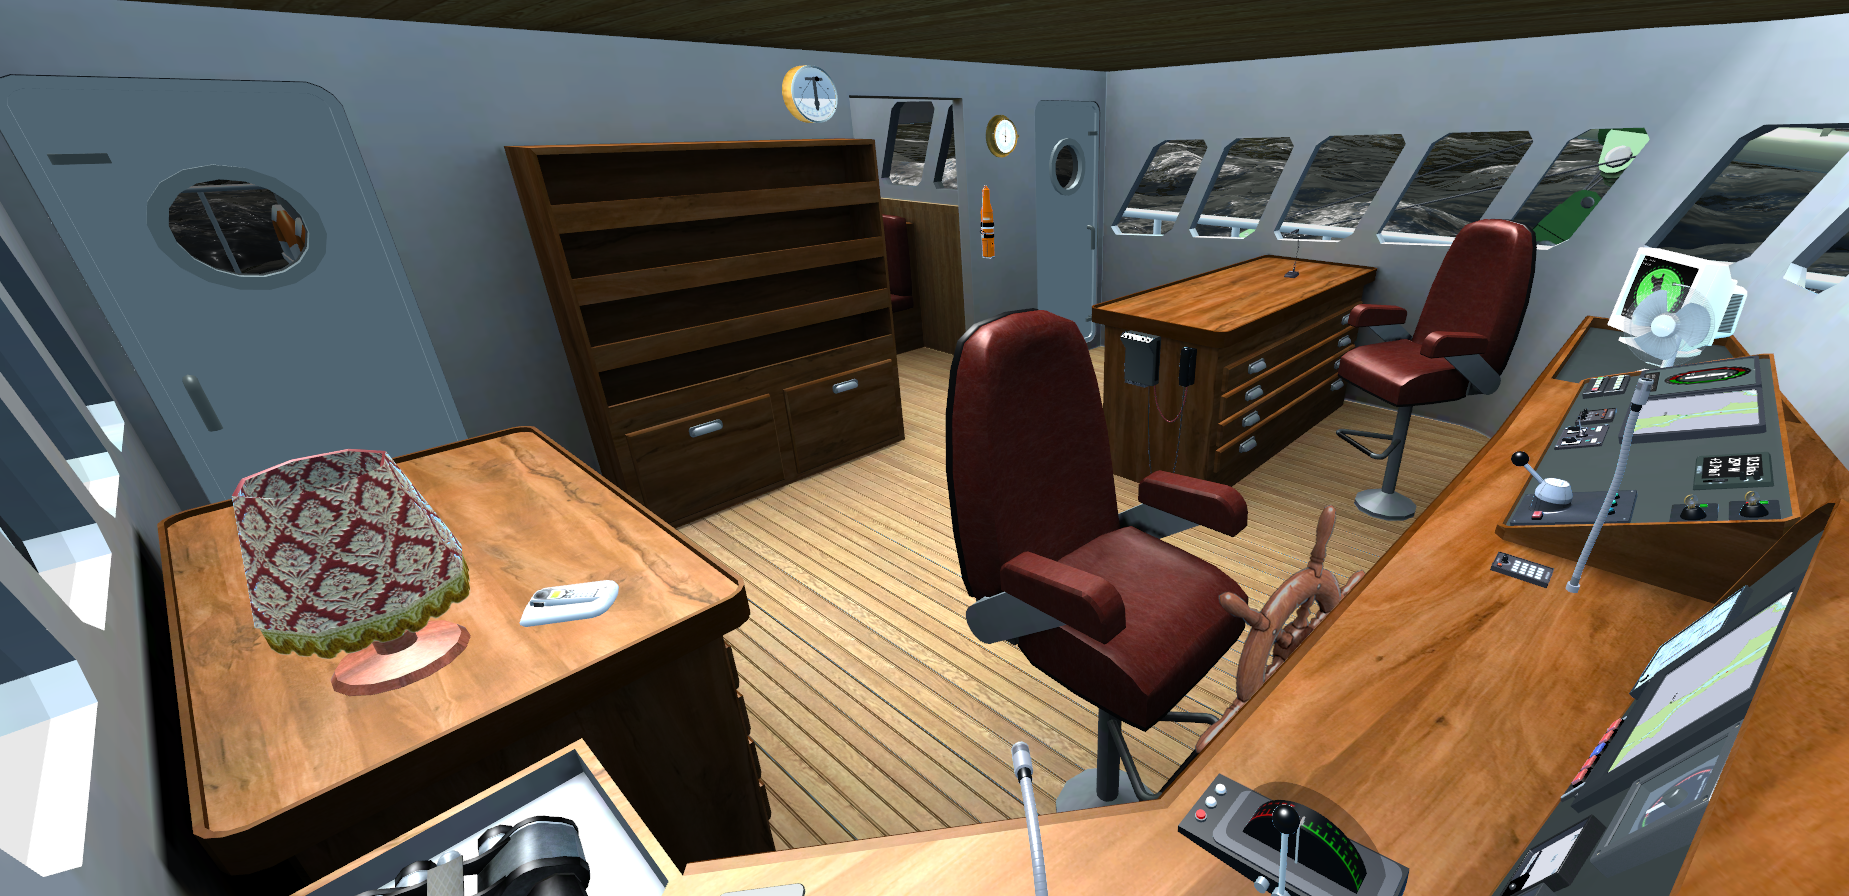 Ship Simulator extremes 2010. The ship игра. Реалистичный симулятор корабля. Симулятор офиса. Игра симулятор двери